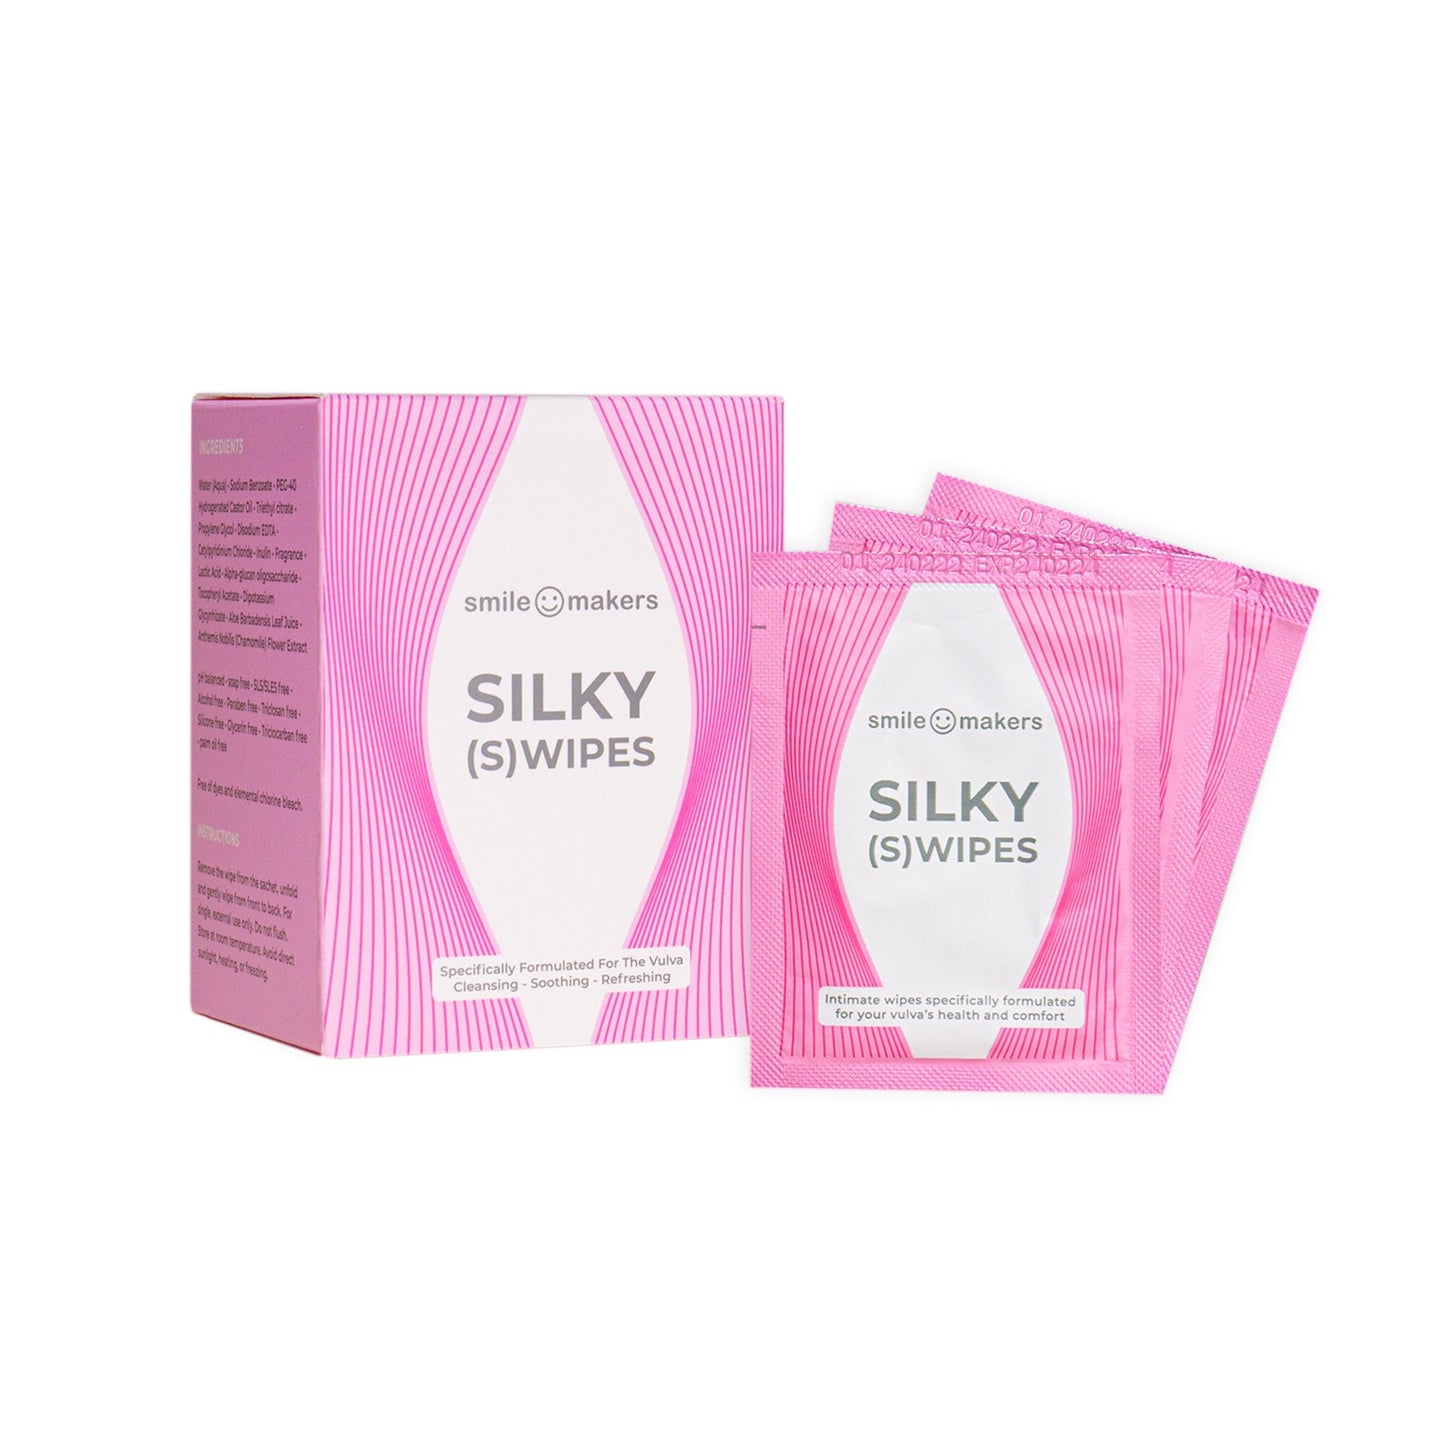 SMILE MAKERS Silky (S)wipes 純素私密濕紙巾 12 片獨立包裝 購買